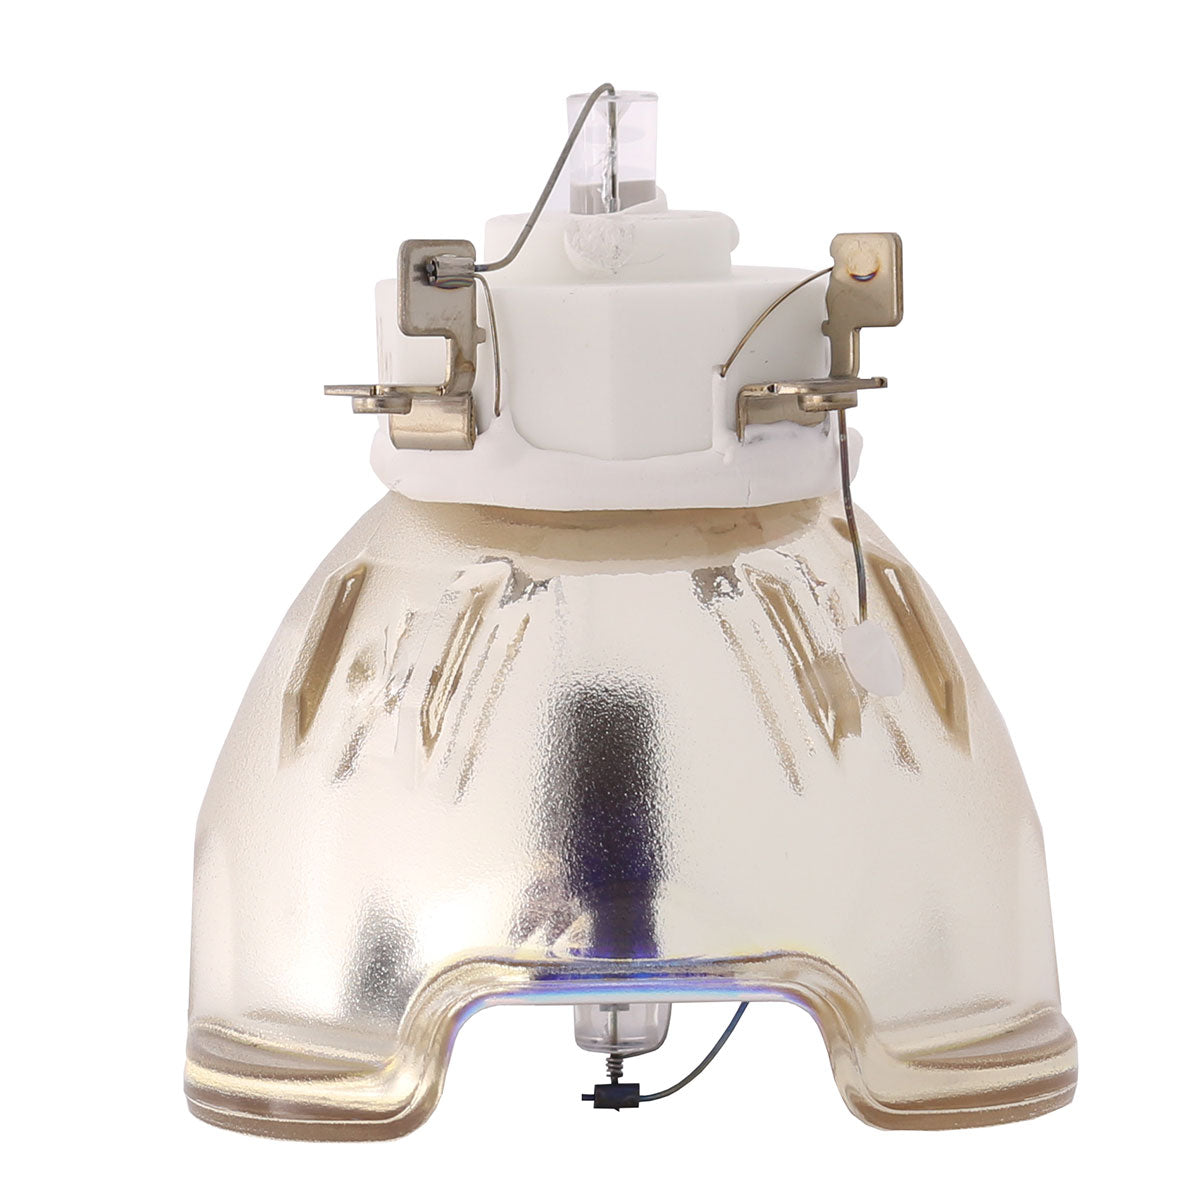 Viewsonic RLC-103 Ushio Projector Bare Lamp